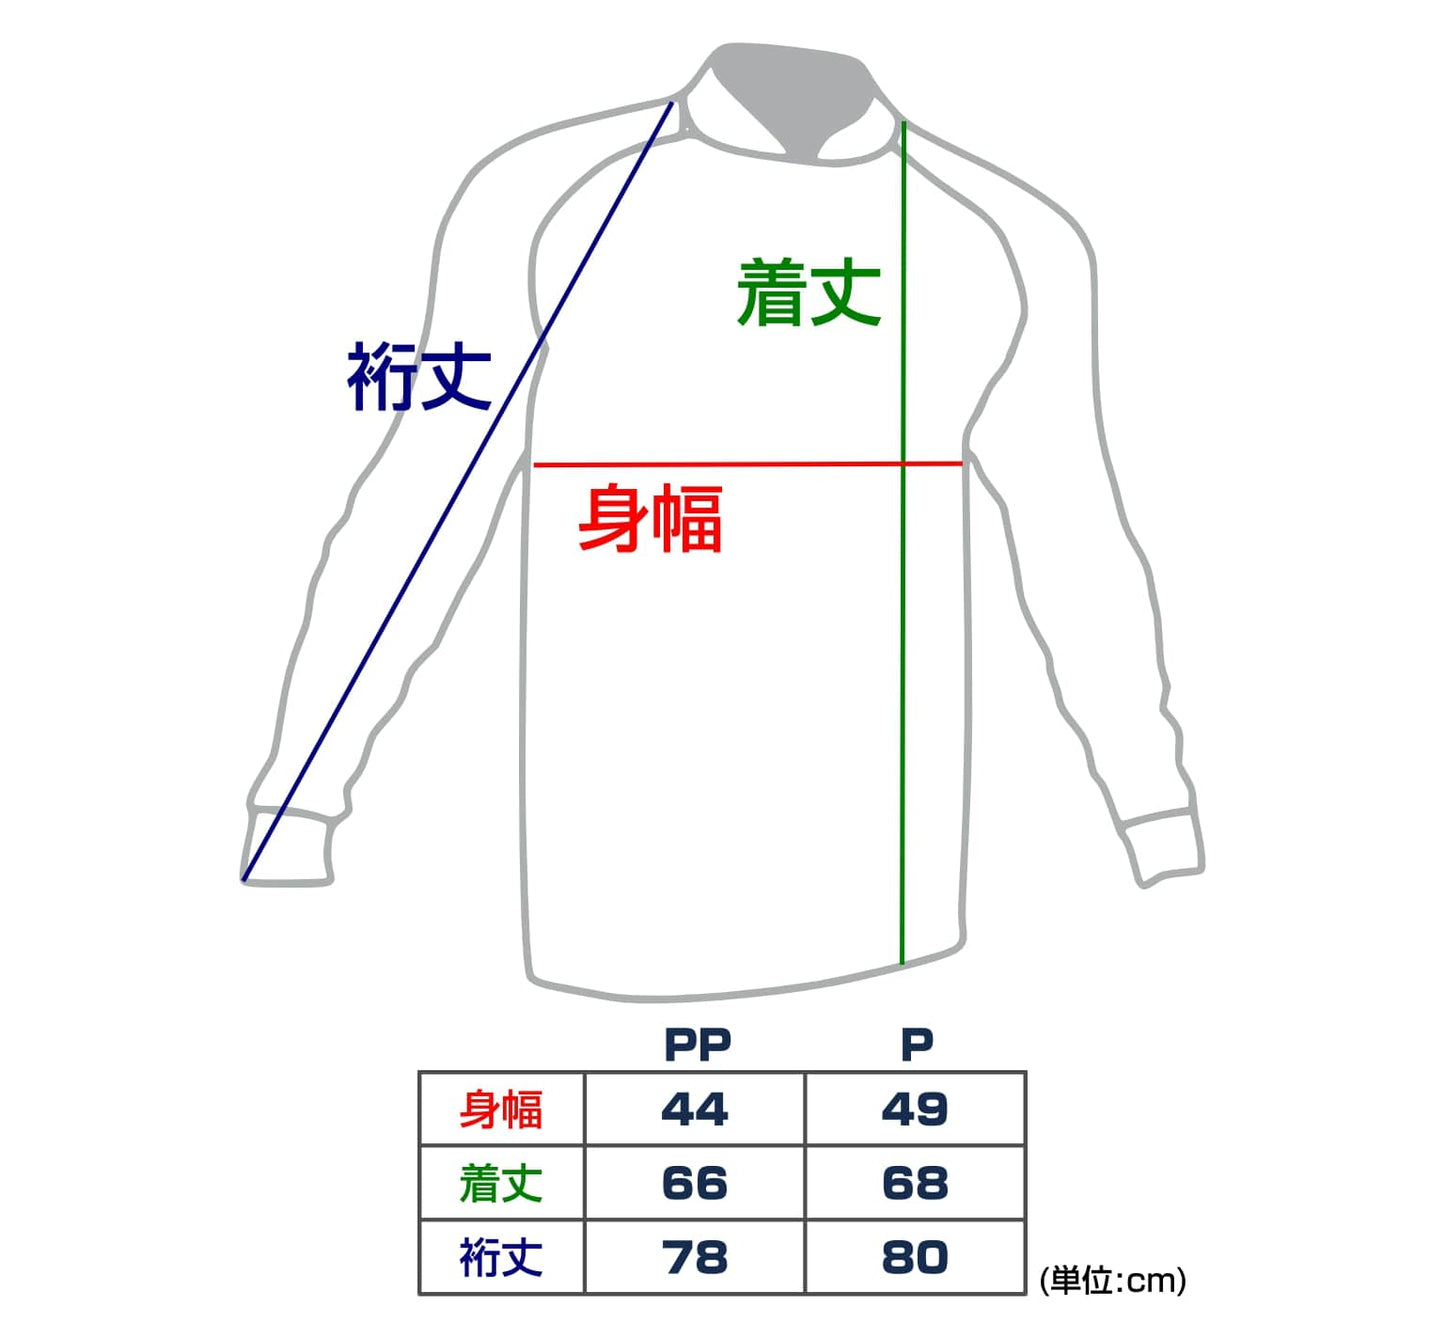 PresaVivaフィッシングシャツ & フェイスマスクのセット【UVカット】